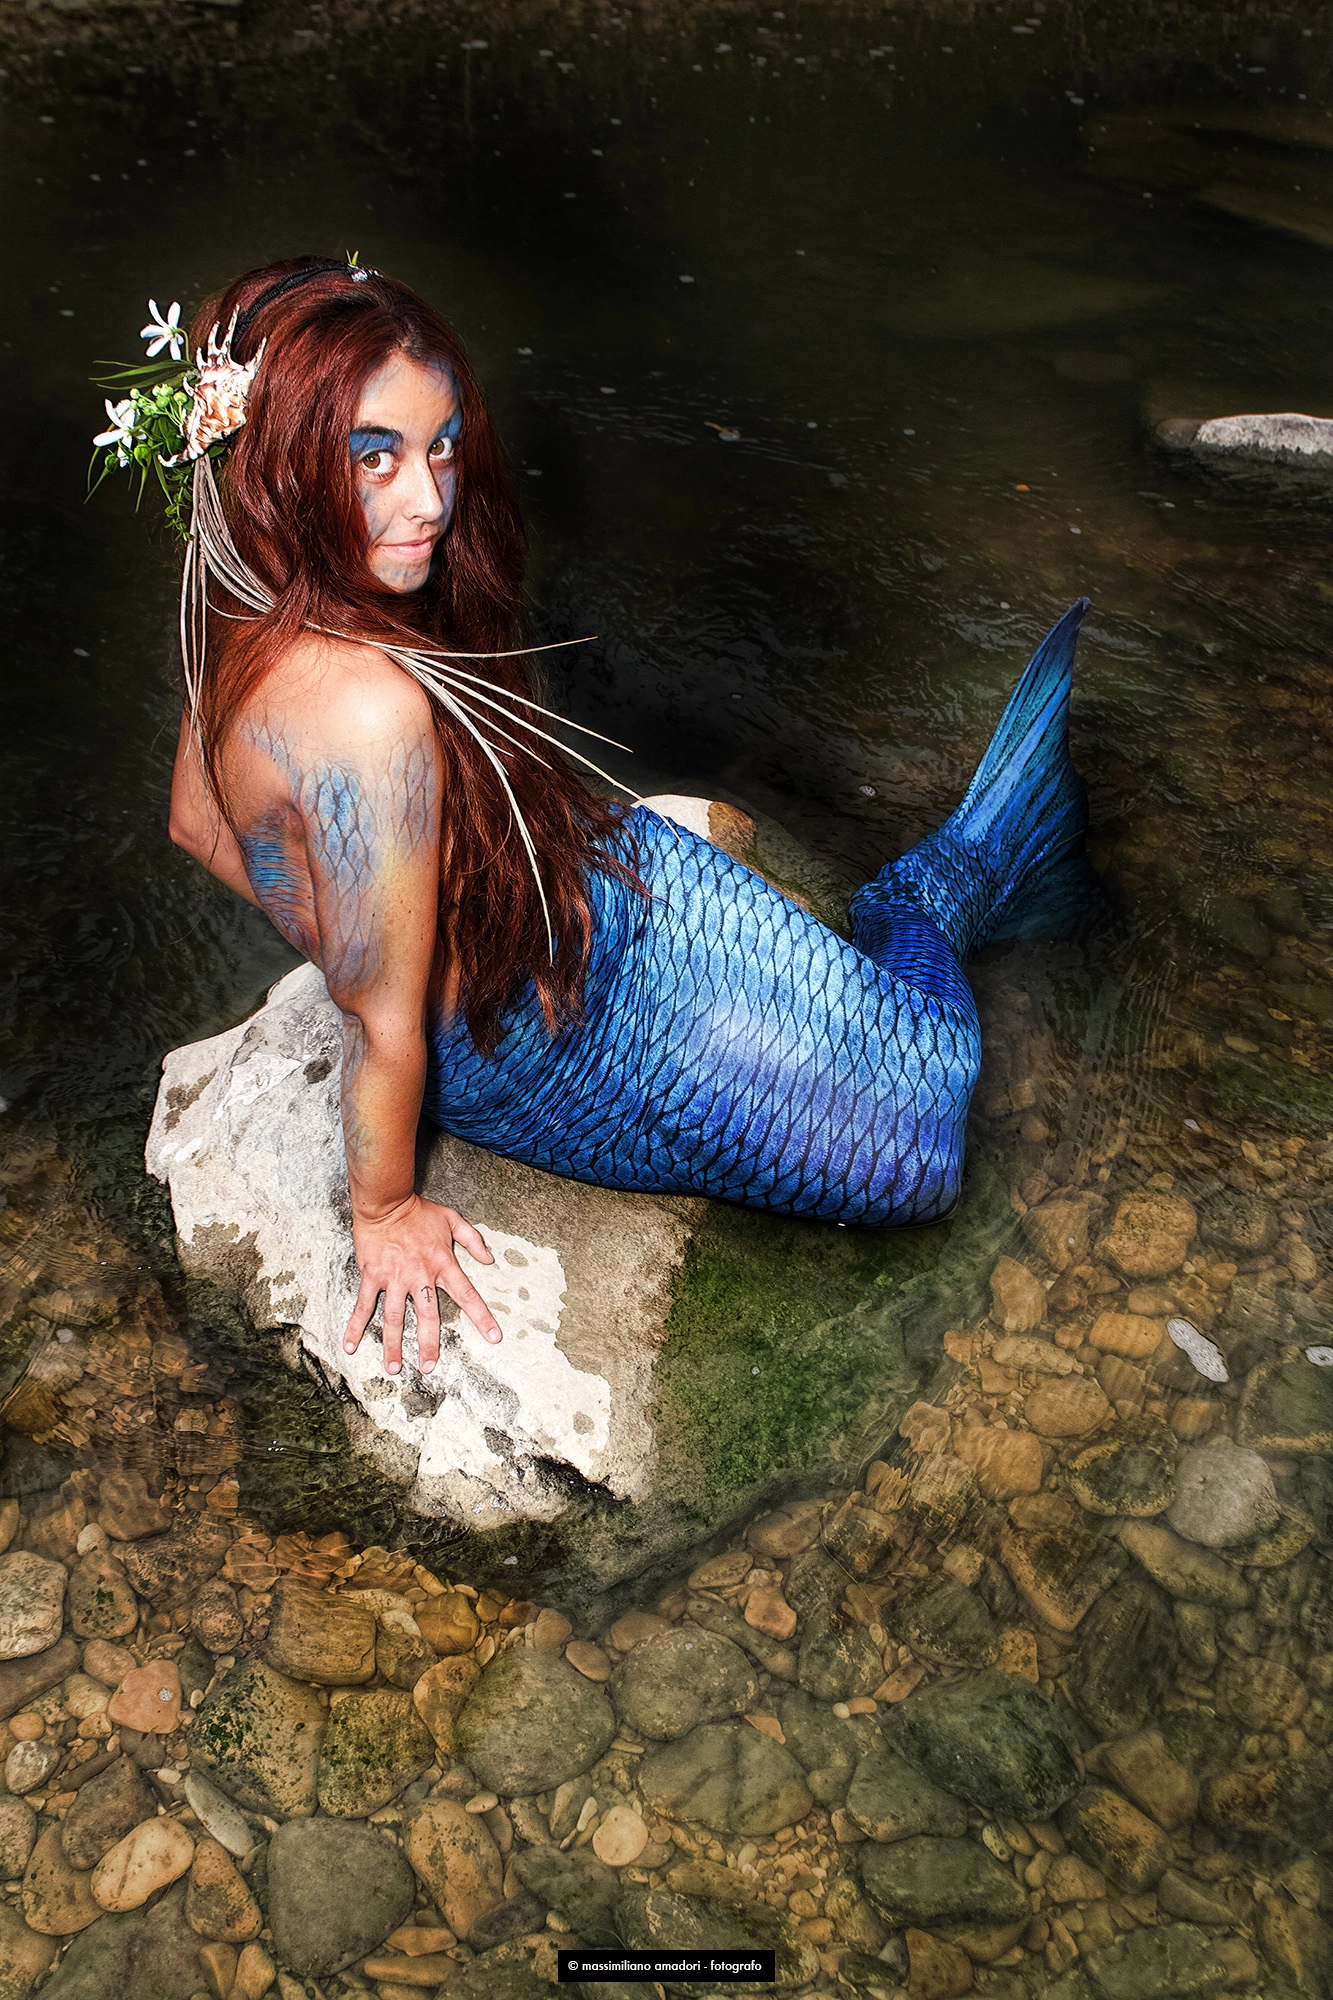 Sigma SD1 Merrill sample photo. Mermaid photography